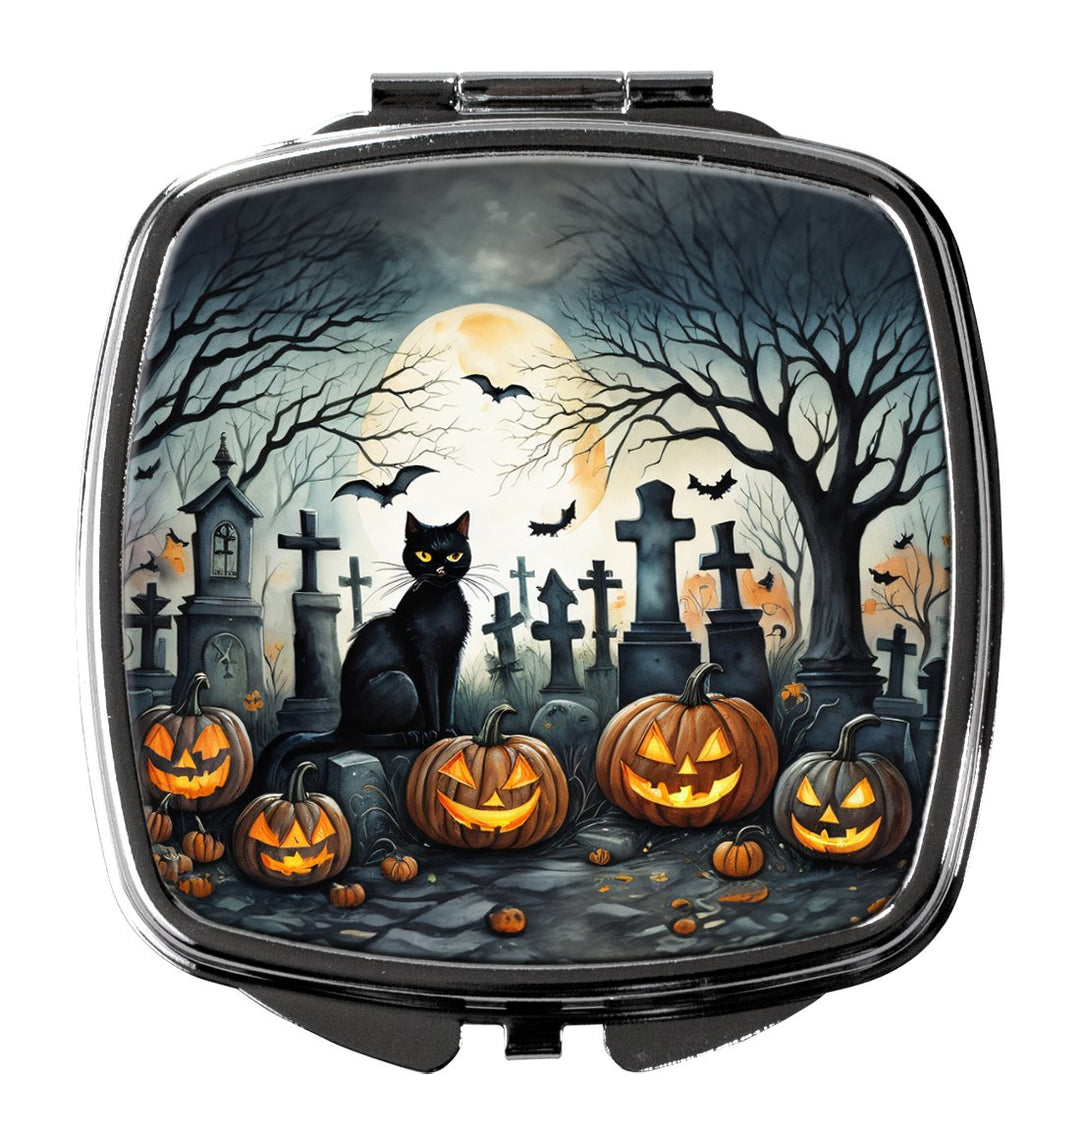 Zombies Spooky Halloween Compact Mirror Image 9